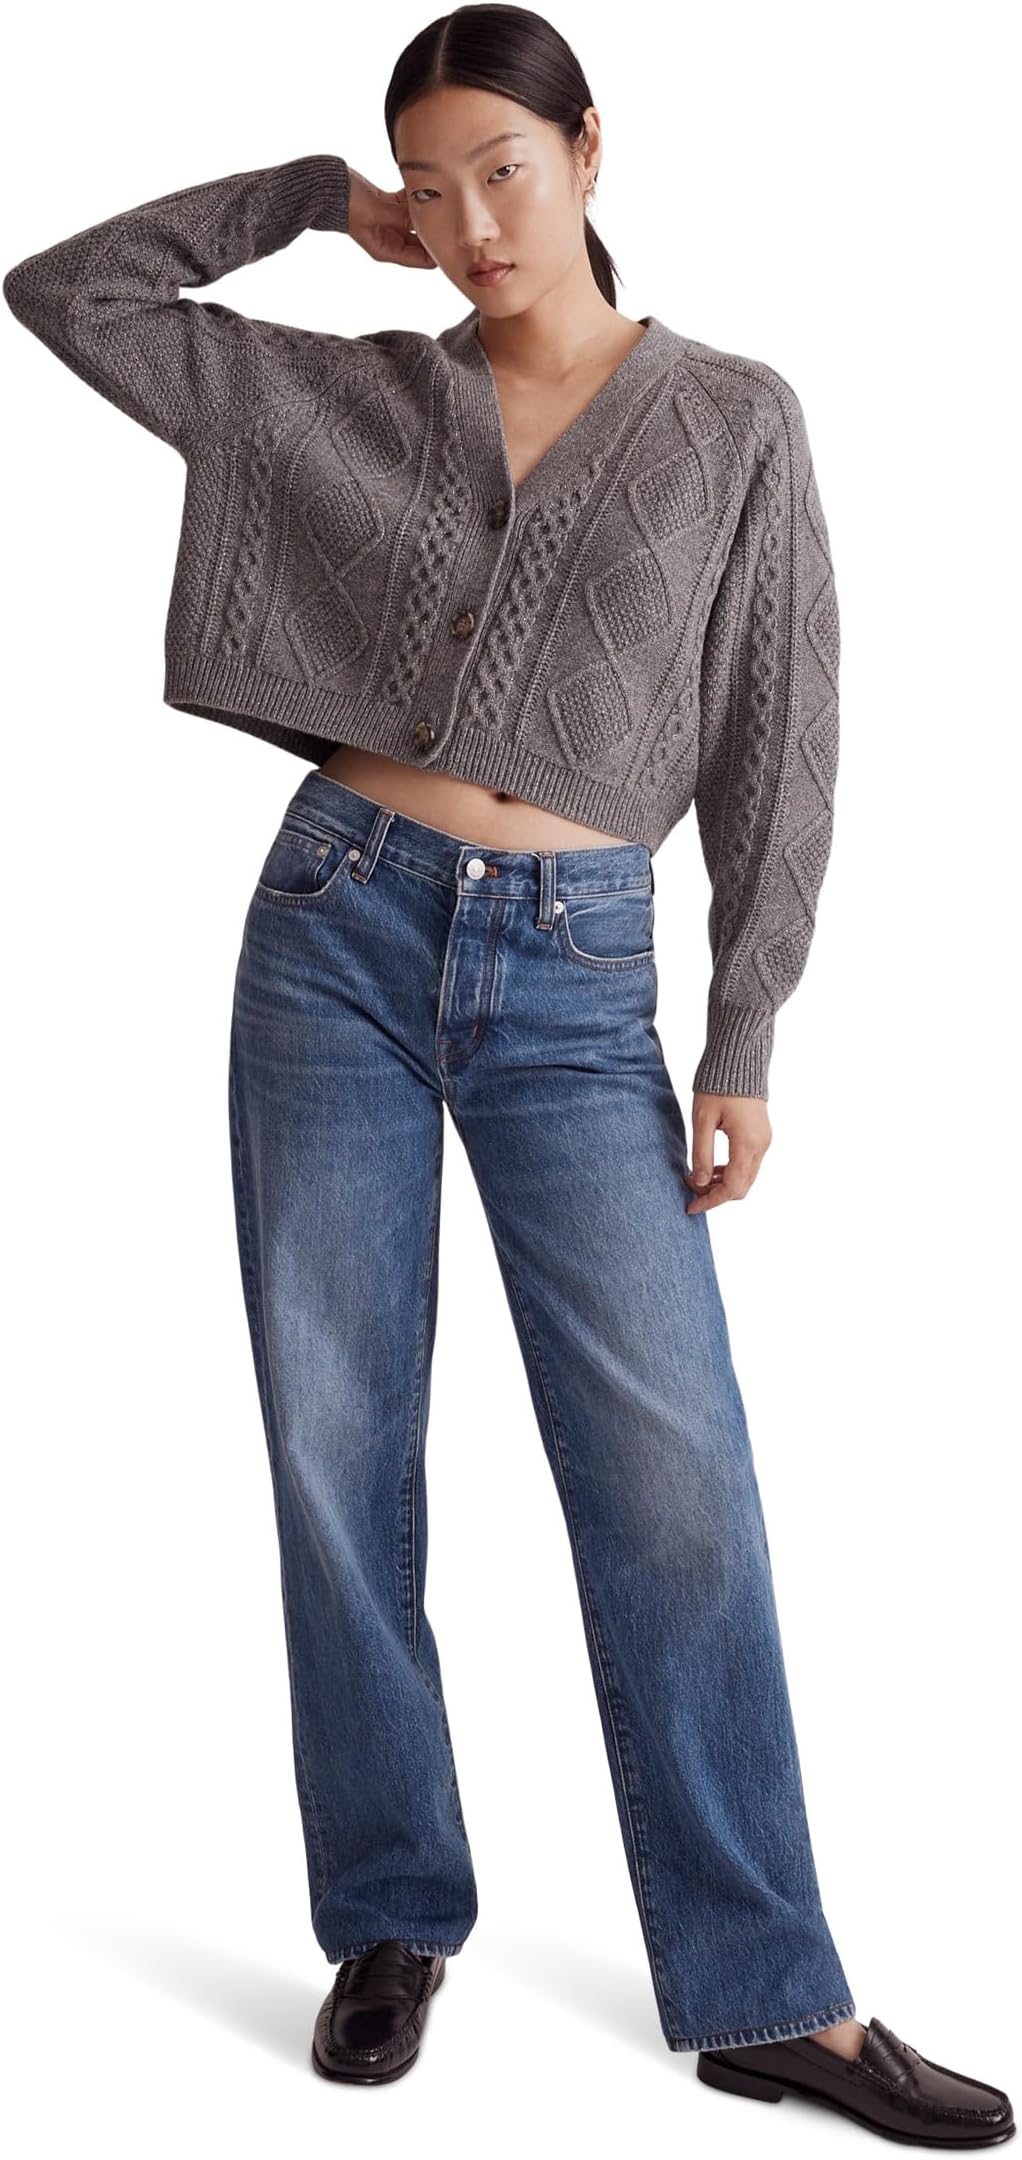 Свитер Cable-Knit Crop Cardigan Madewell, цвет Heather Graphite свитер madewell aviva cable cardigan цвет heather powder